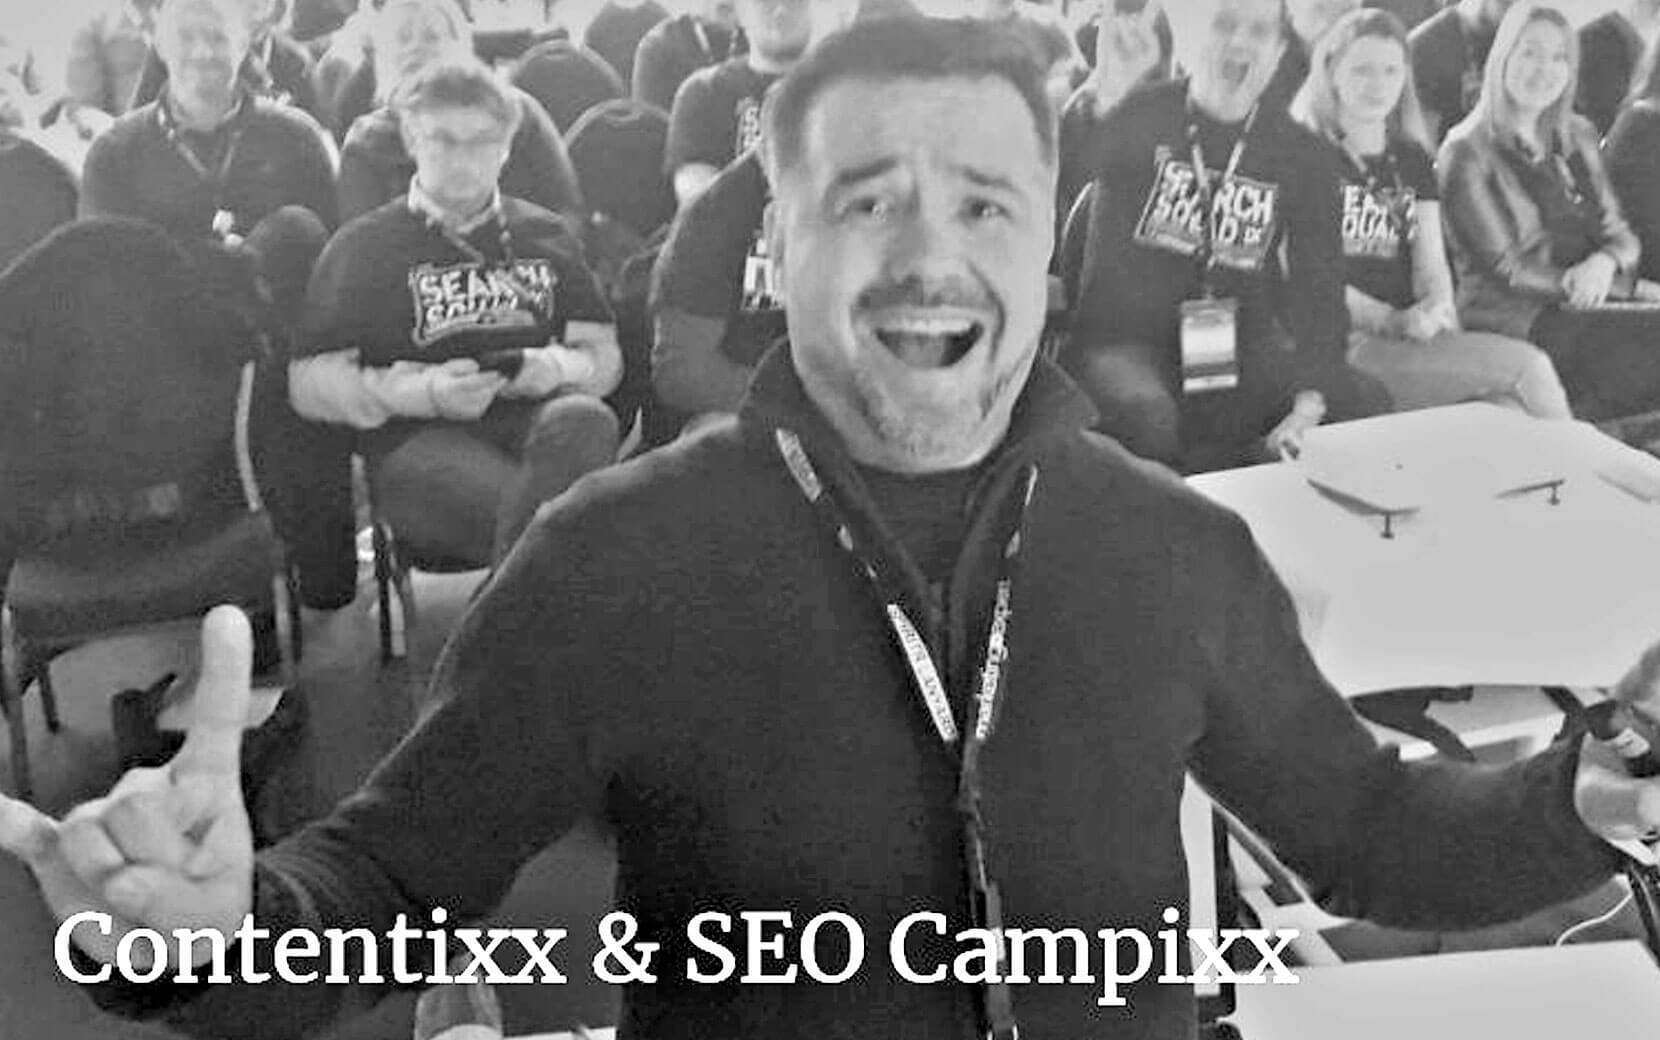 SEO Campixx-Week 2018 - Impression